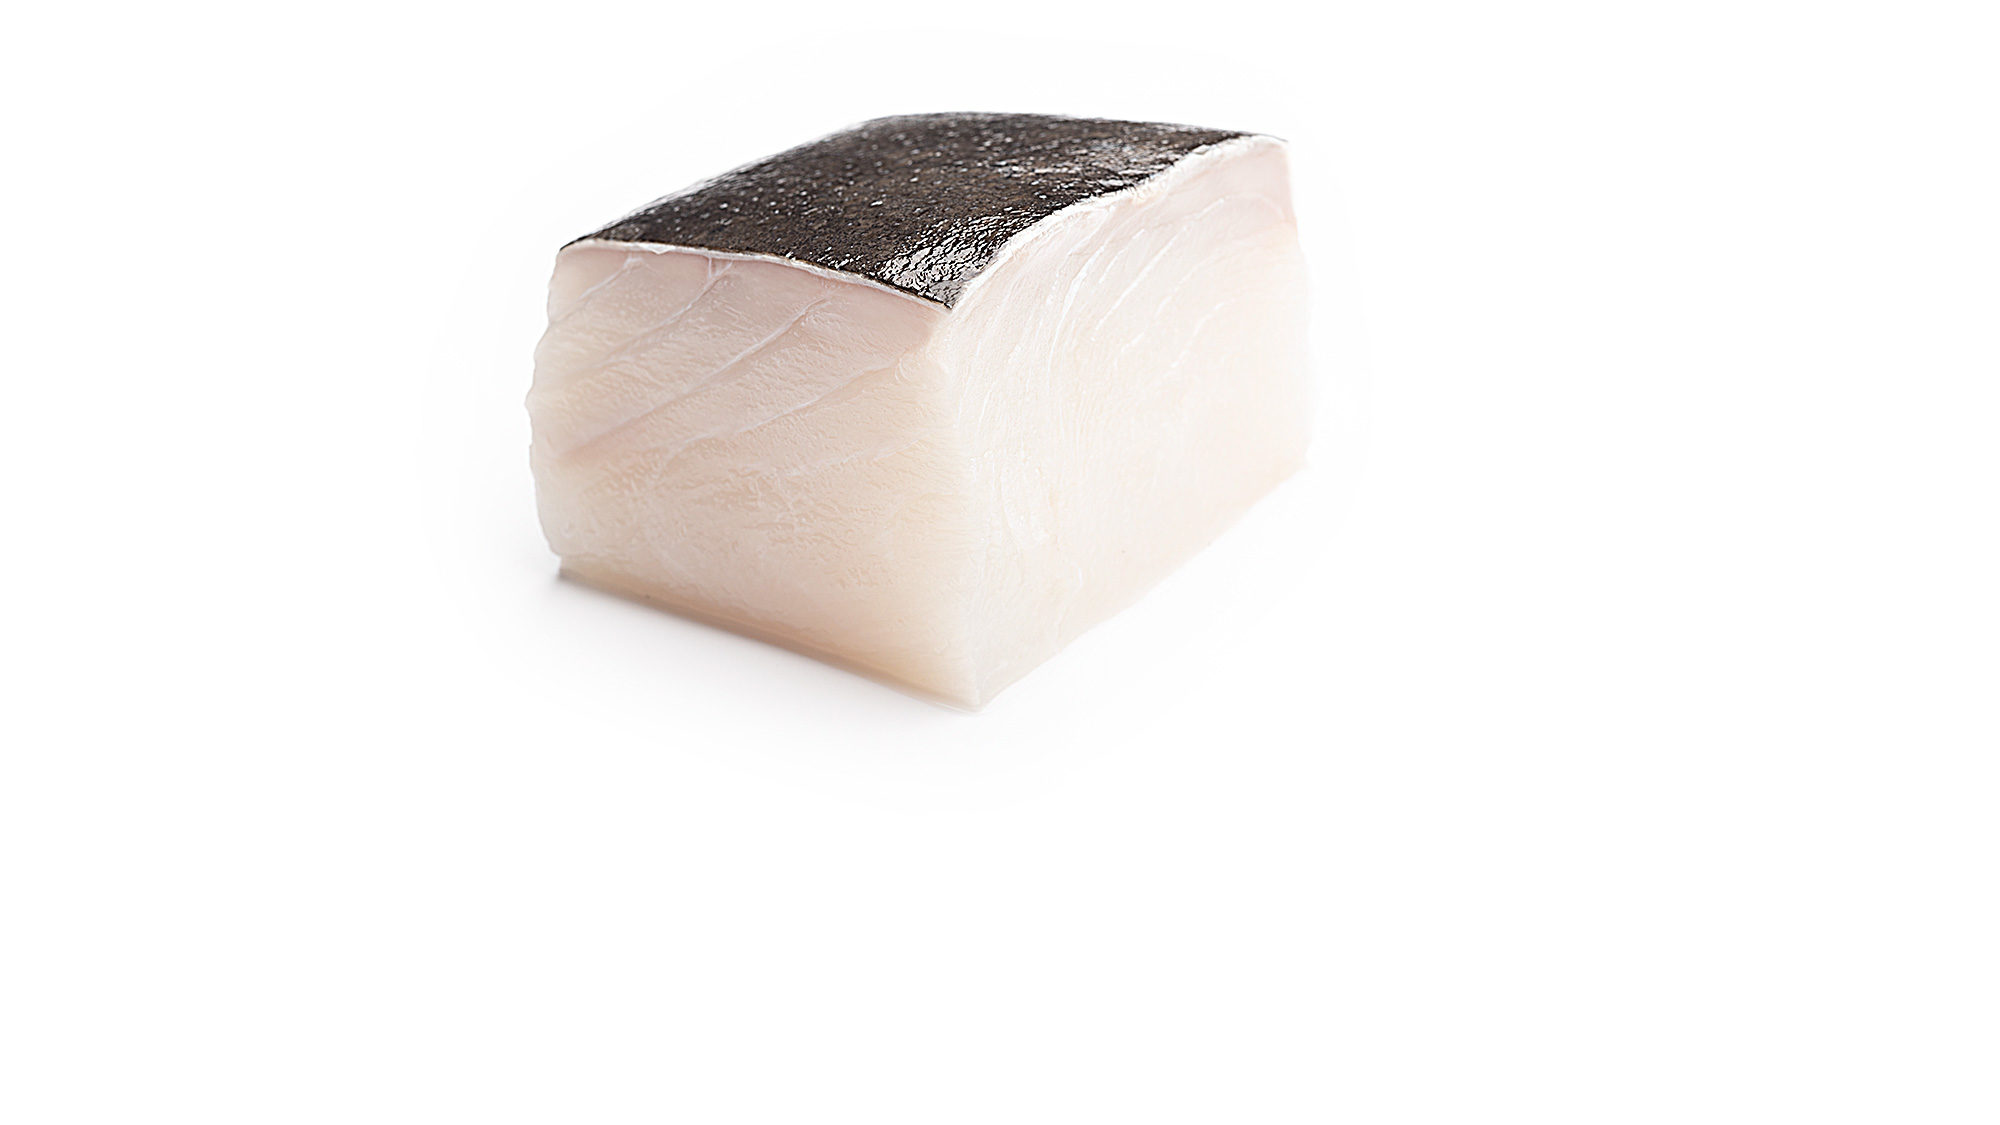 A fresh cut of halibut